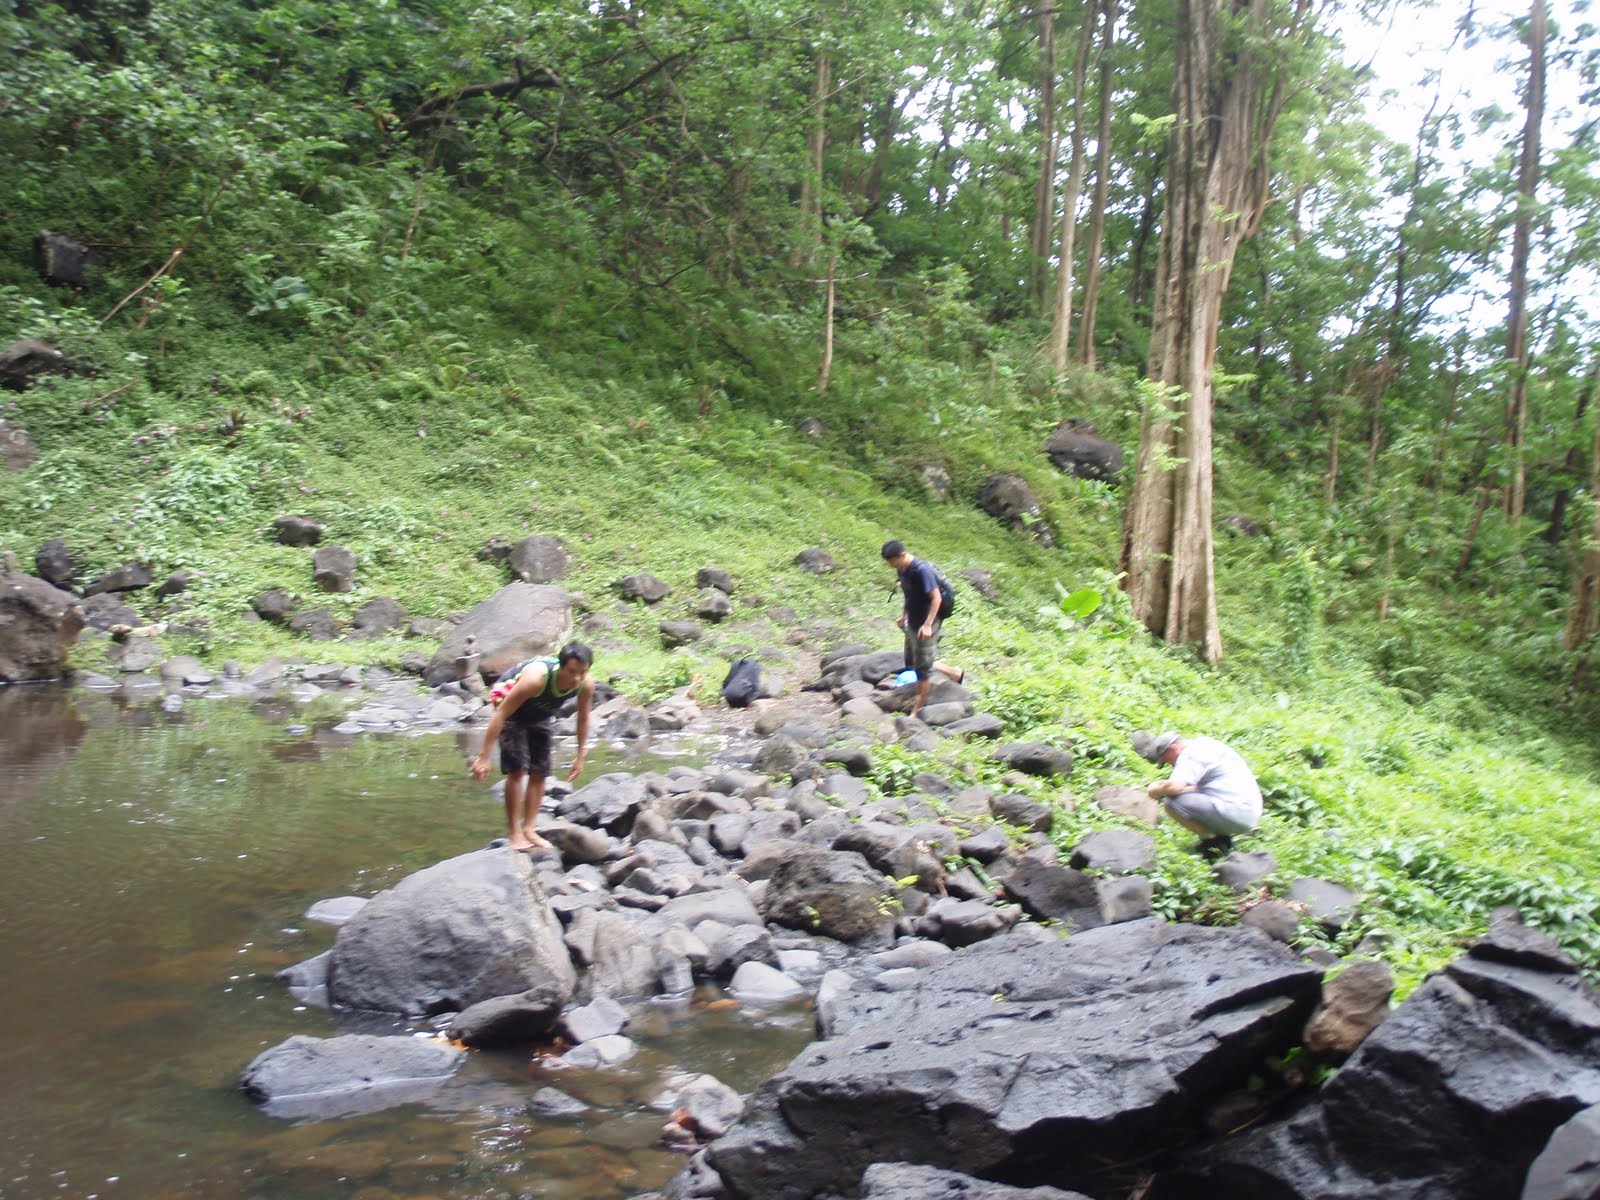 Vetea, Yasunori, and John amongst the rocks and brush at the edge of the waterfall's pool